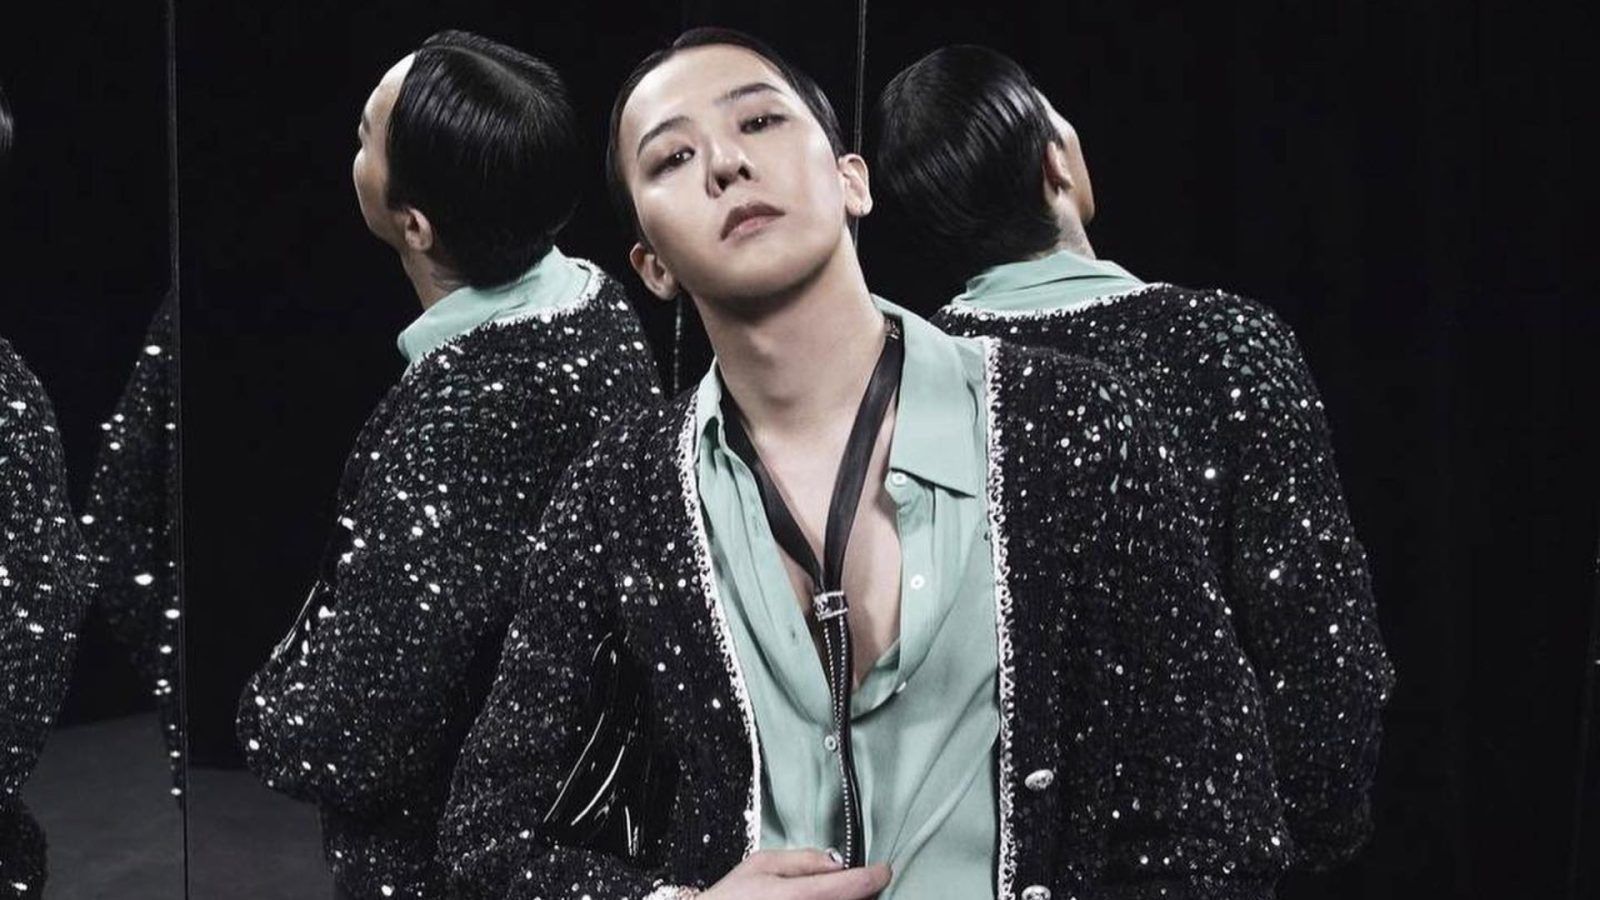 Enter the G-Dragon Fashion's New It Boy